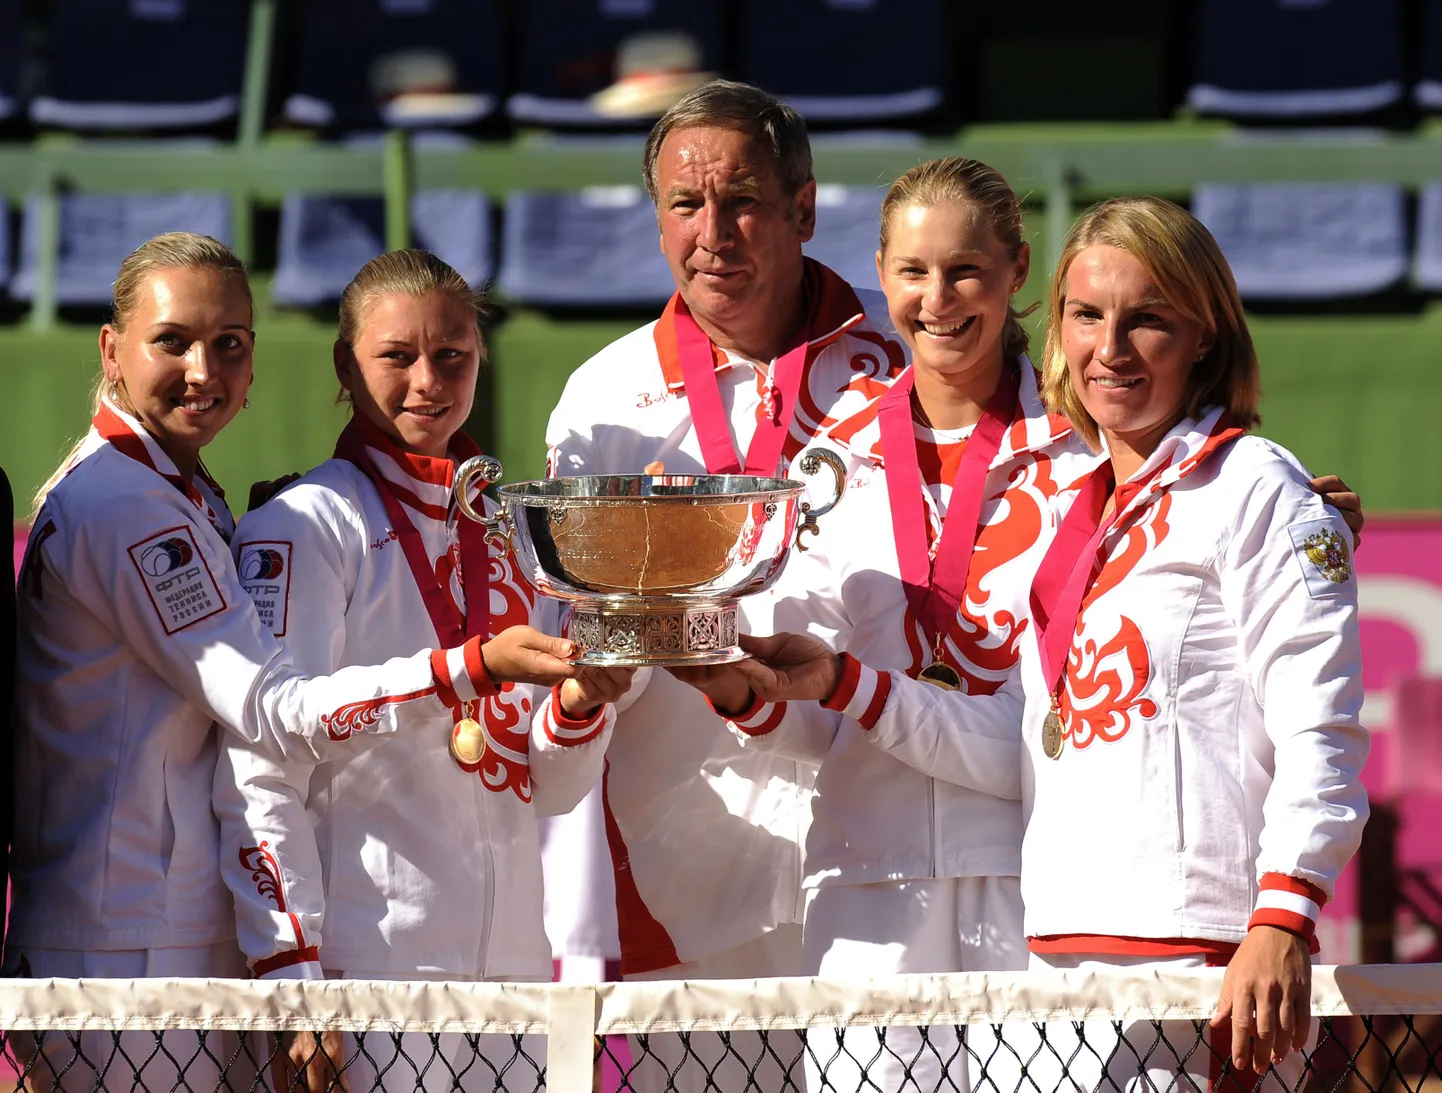 Venemaa tennisenaiskond koosseisus (vasakult) Jelena Vesnina, Vera Zvonarjova, Jekaterina Makarova ja Svetlana Kuznetsova, keskel treener Šamil Tarpištšev.